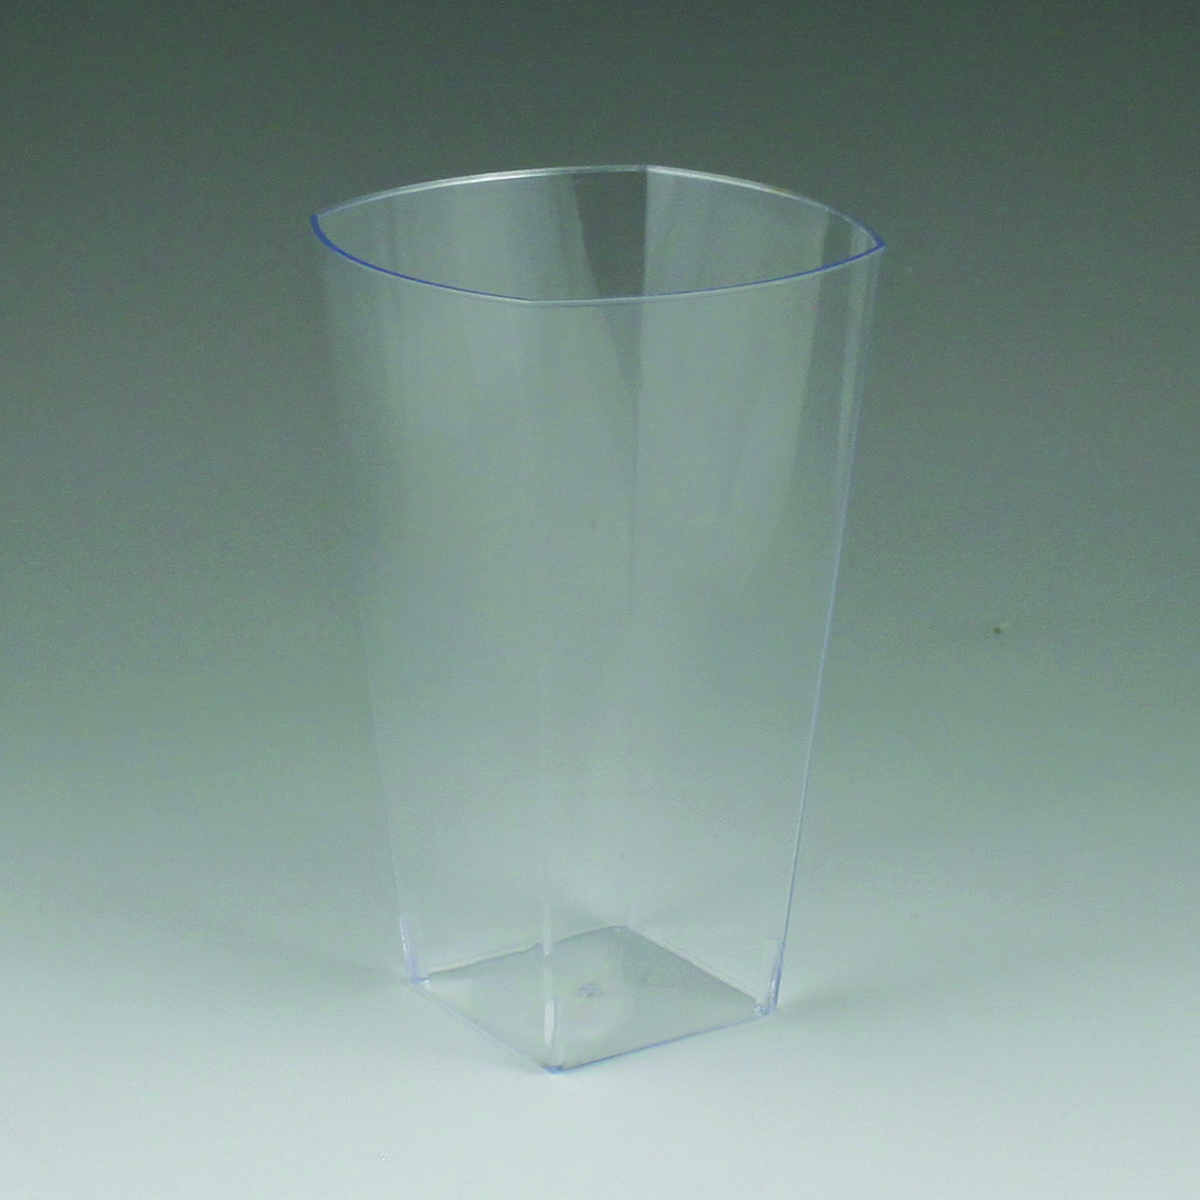 12 oz. Simply Squared Tumbler  Plastic Cups, Utensils, Bowls